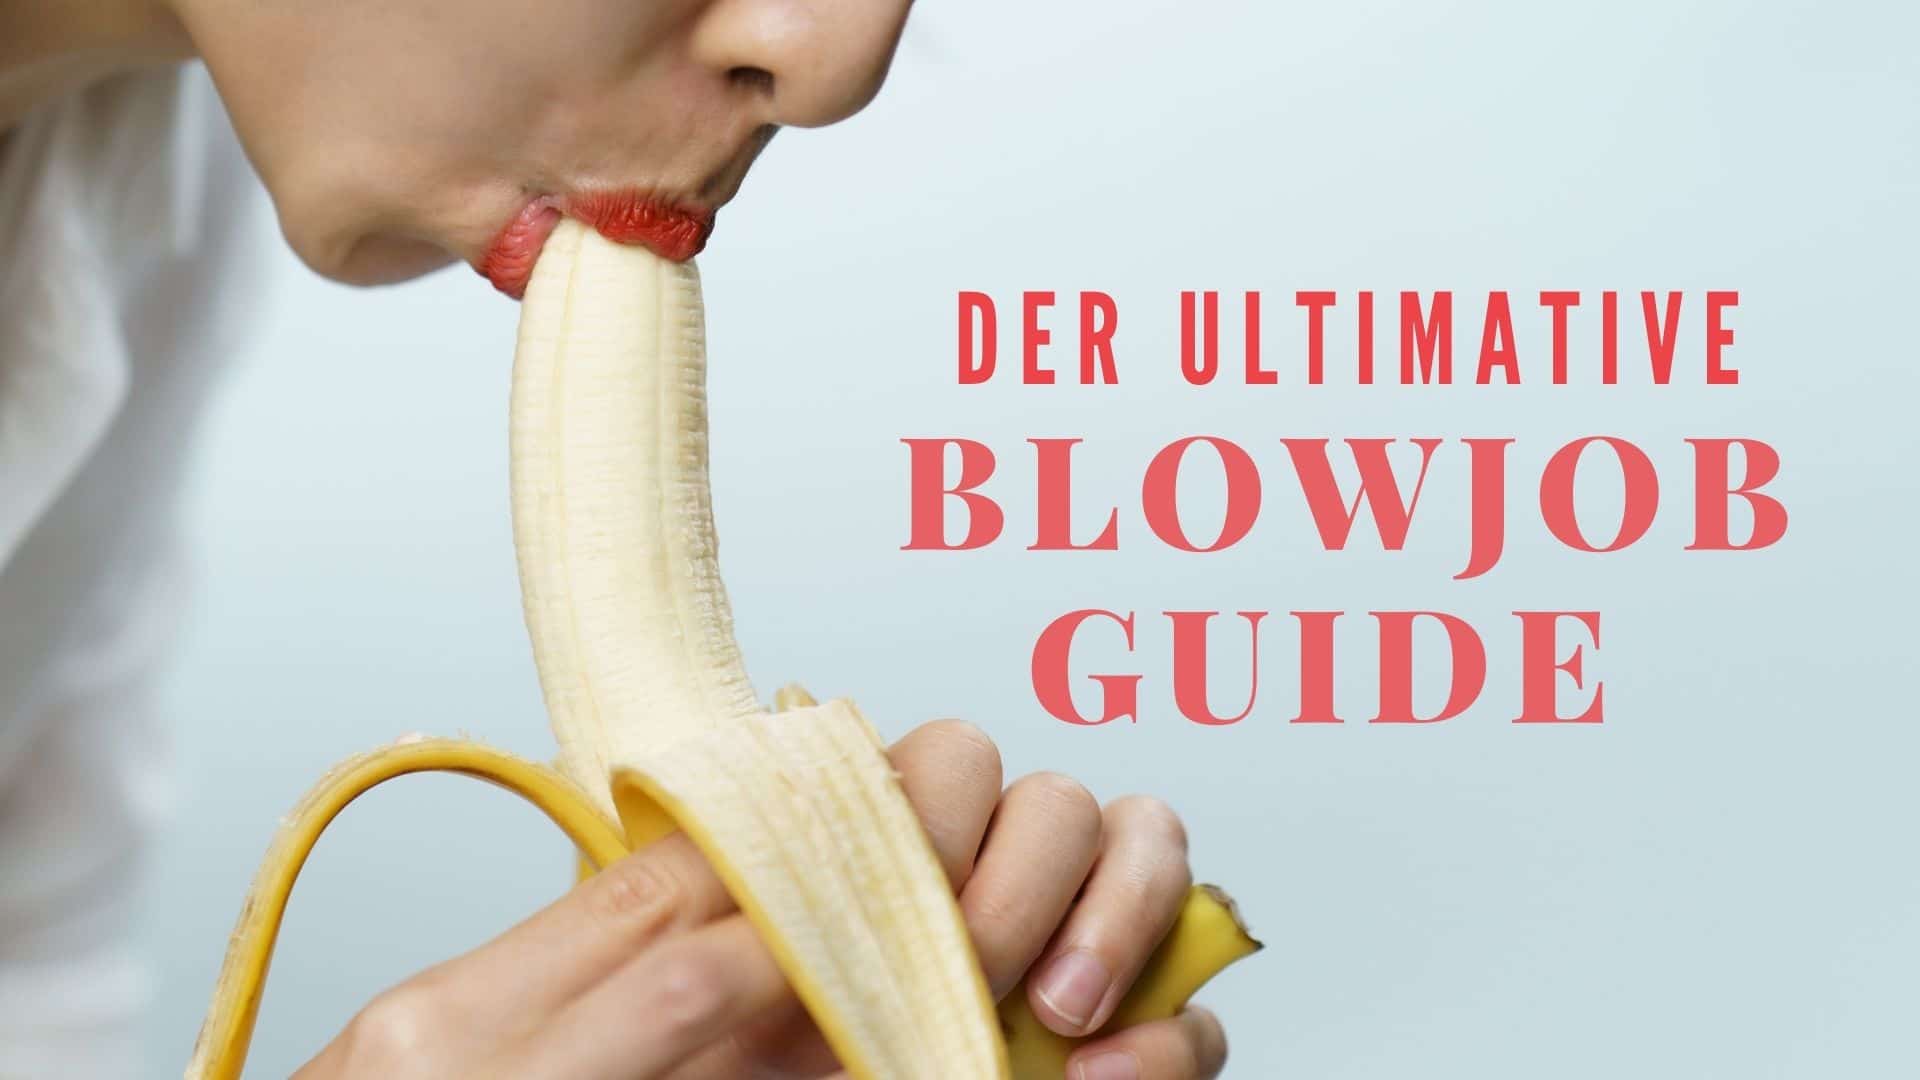 Der ultimative Blowjob Guide